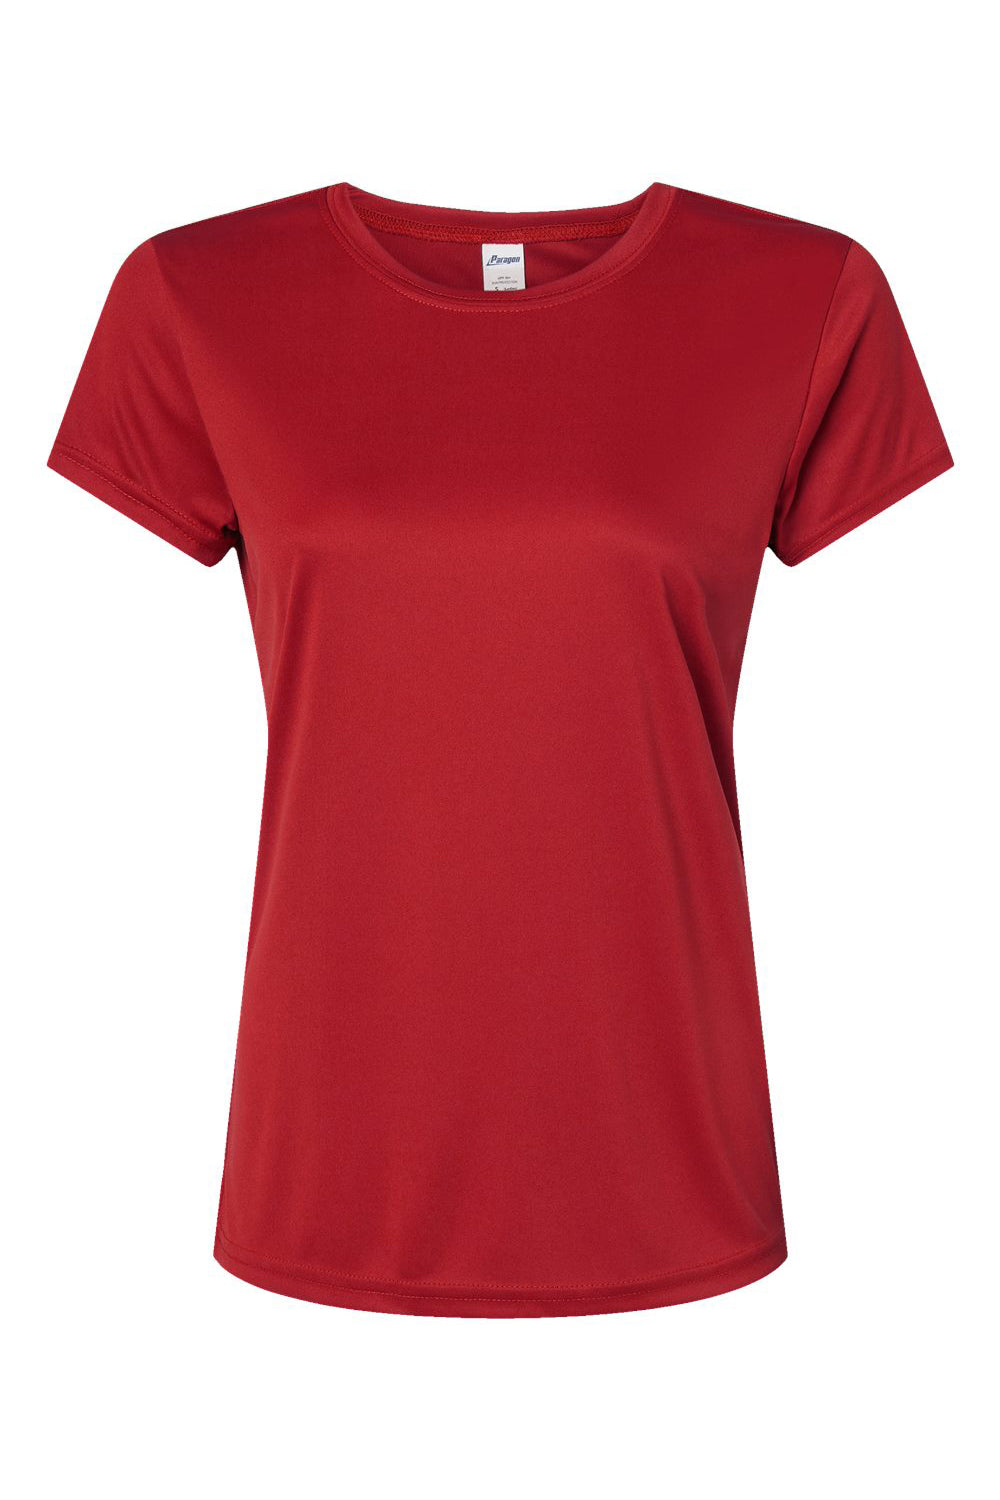 Paragon 204 Womens Islander Performance Short Sleeve Crewneck T-Shirt Red Flat Front